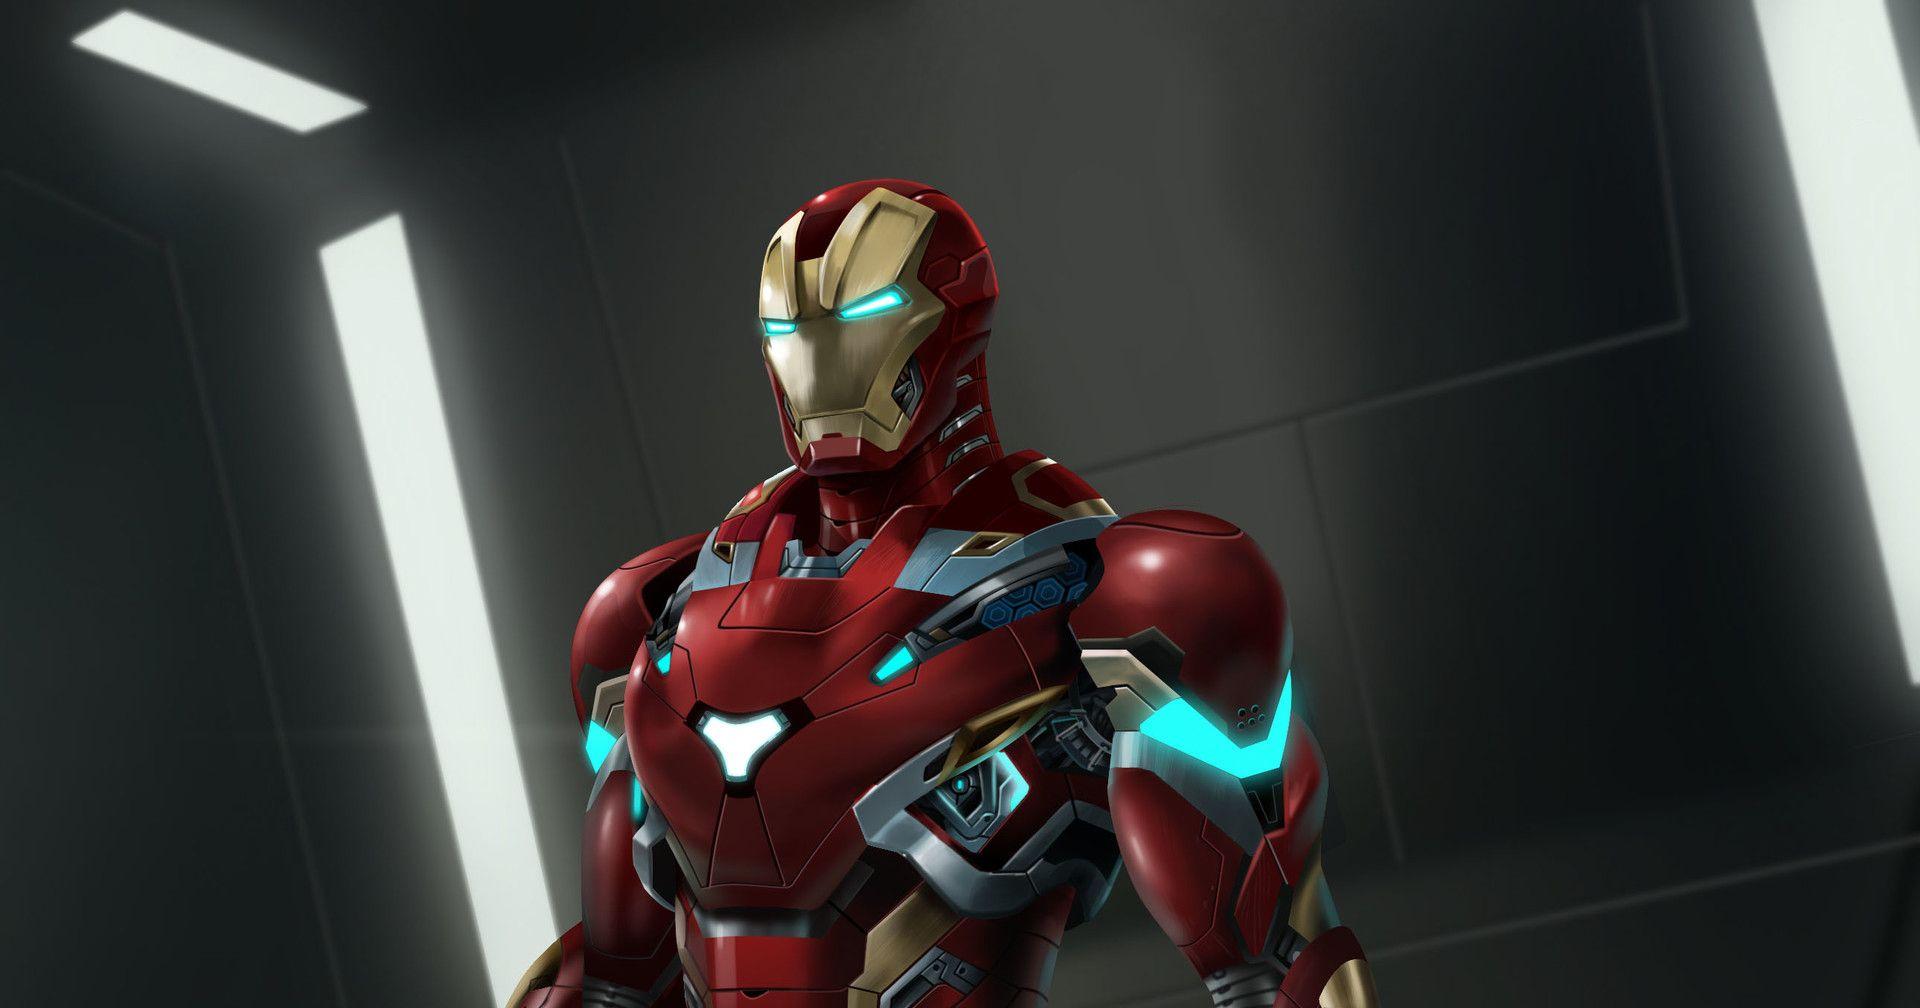 Iron Man Suit Artwork, HD Superheroes, 4k Wallpaper, Image